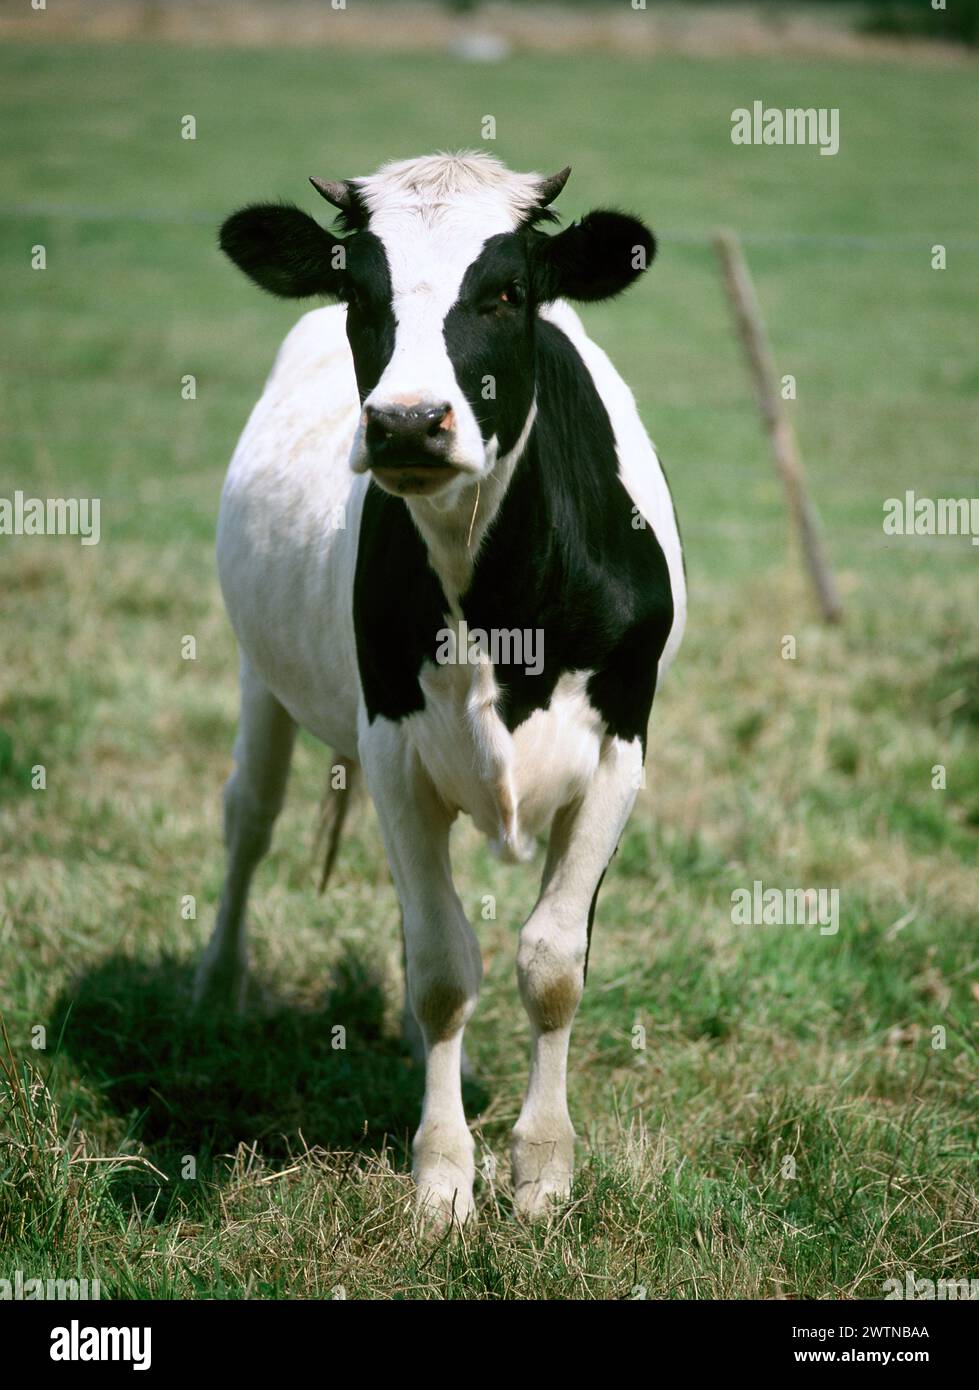 Farm Animal. Holstein Friesian calf in field. Stock Photo